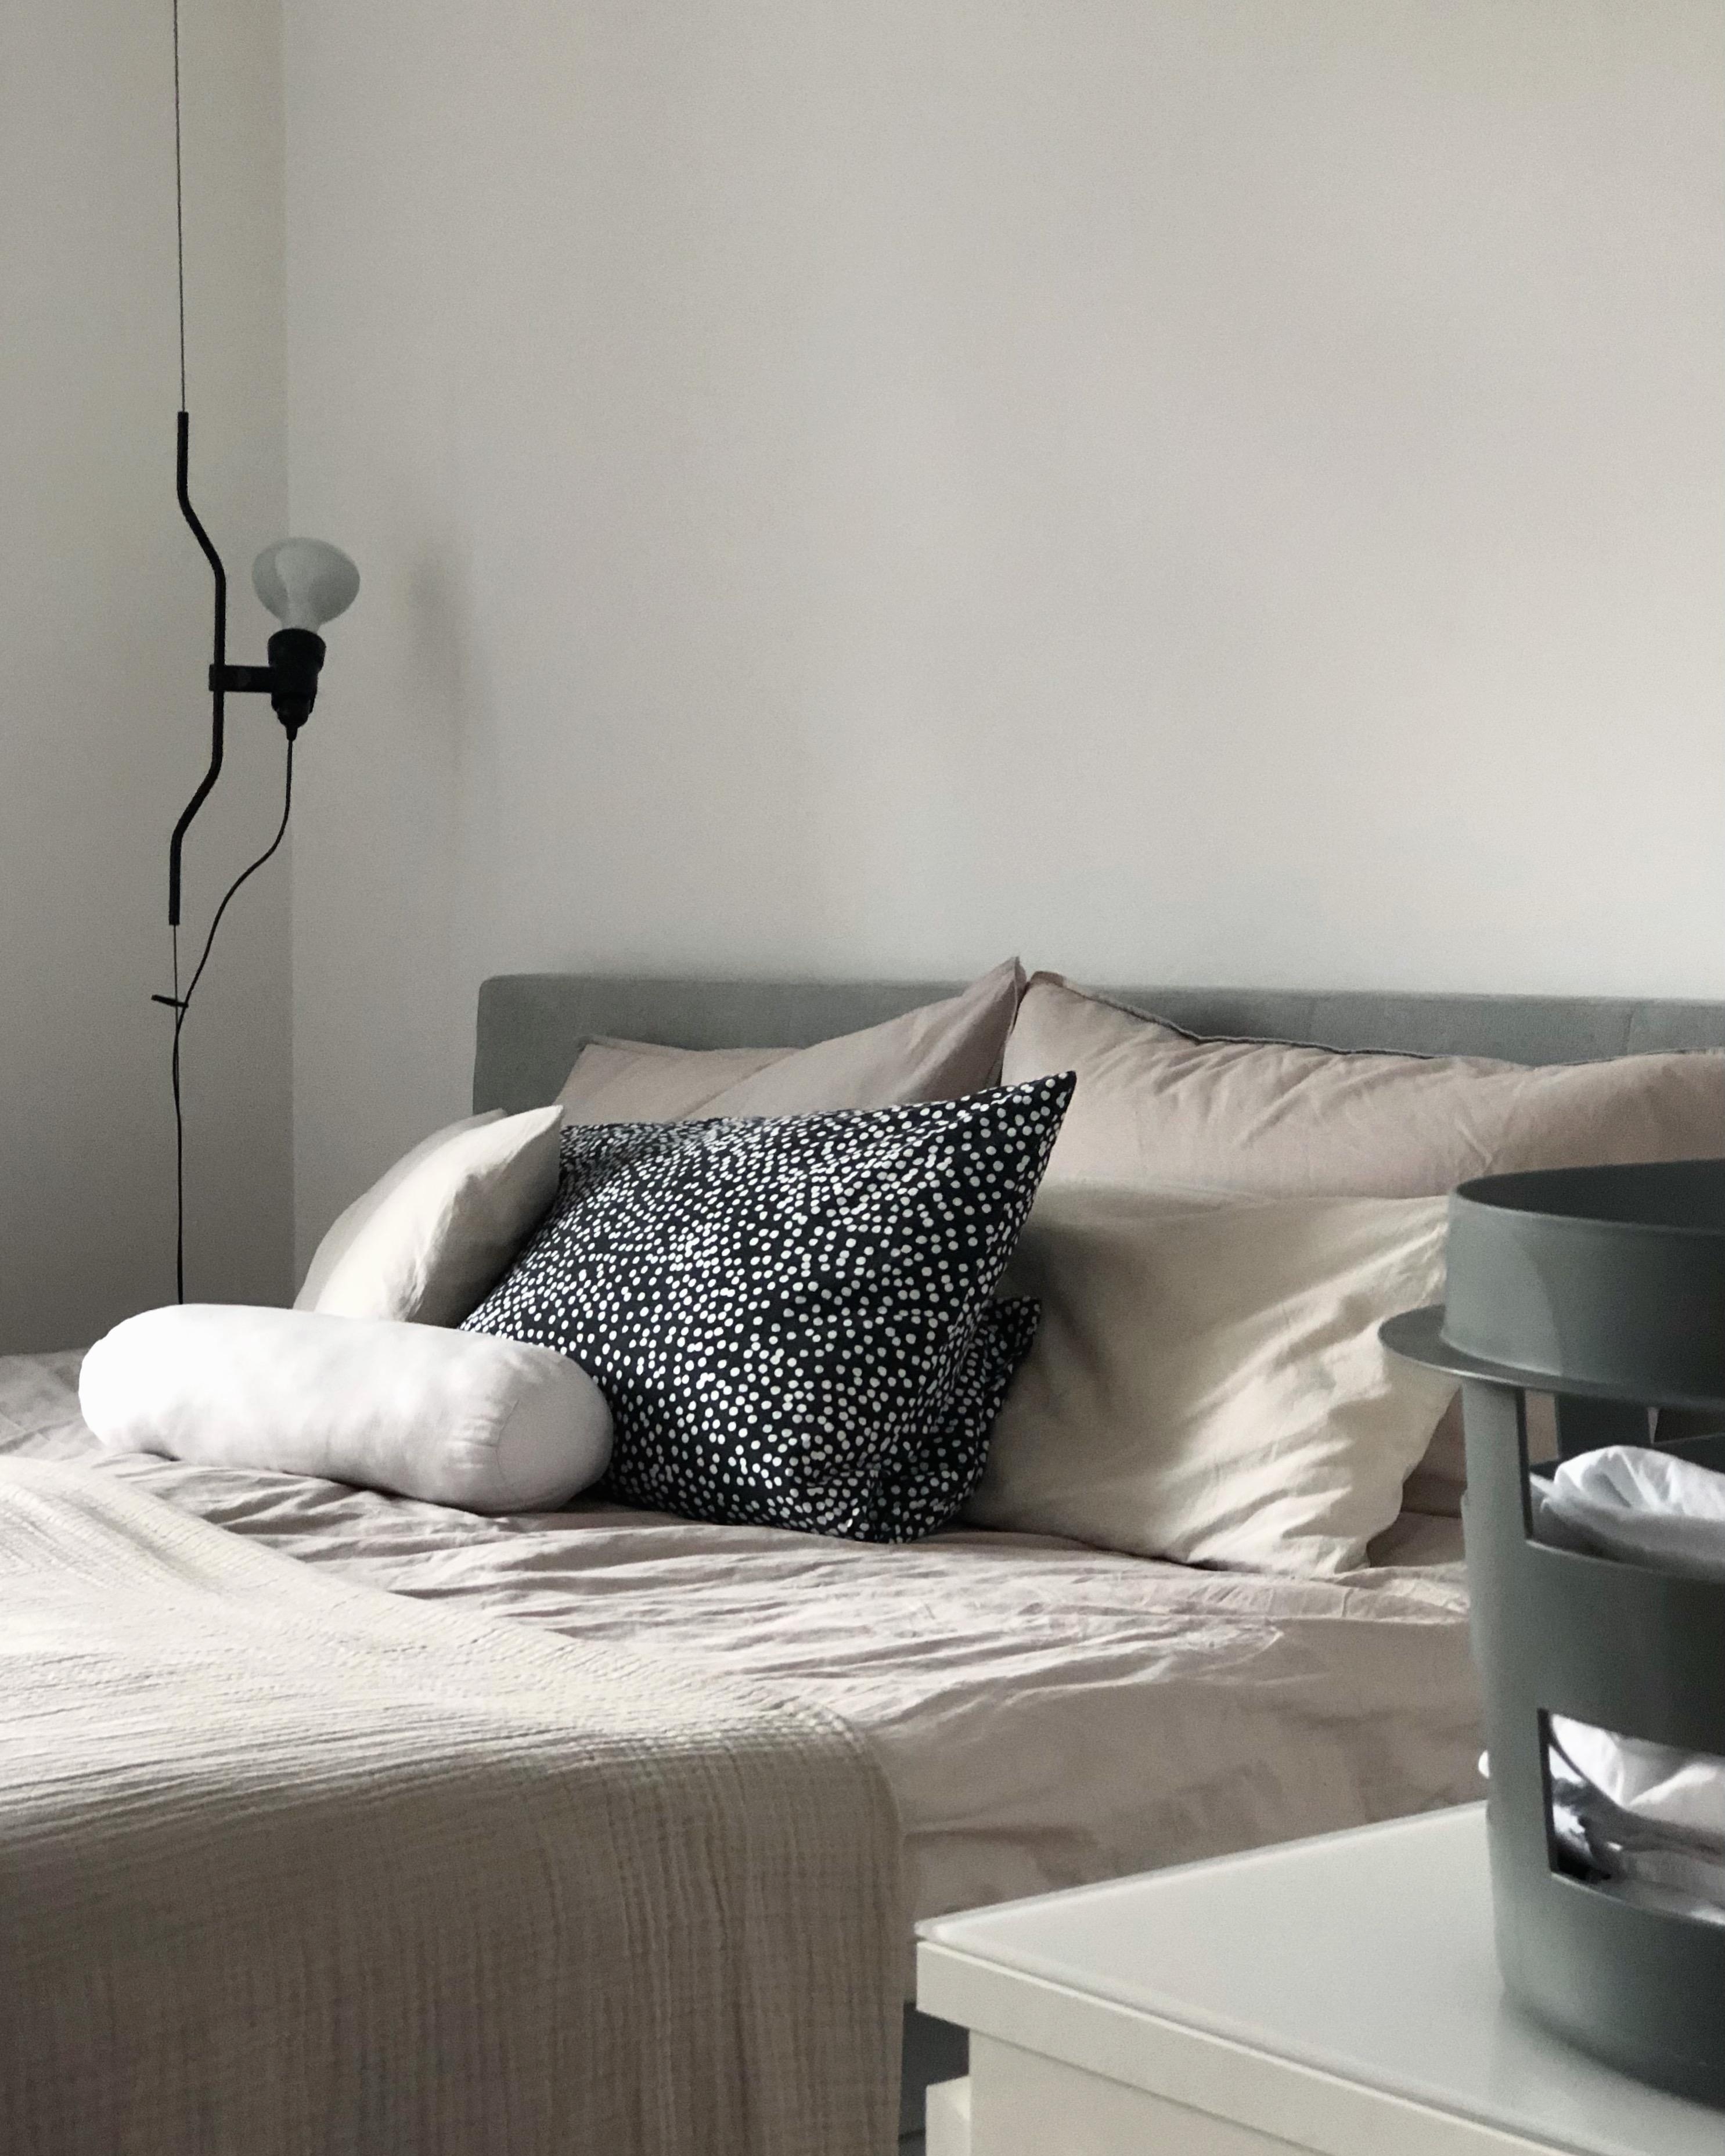 #schlafzimmer #bedroom #bett #bed #minimalism #lampe #beleuchtung #scandi #skandinavisch #interior #cozy #hygge 